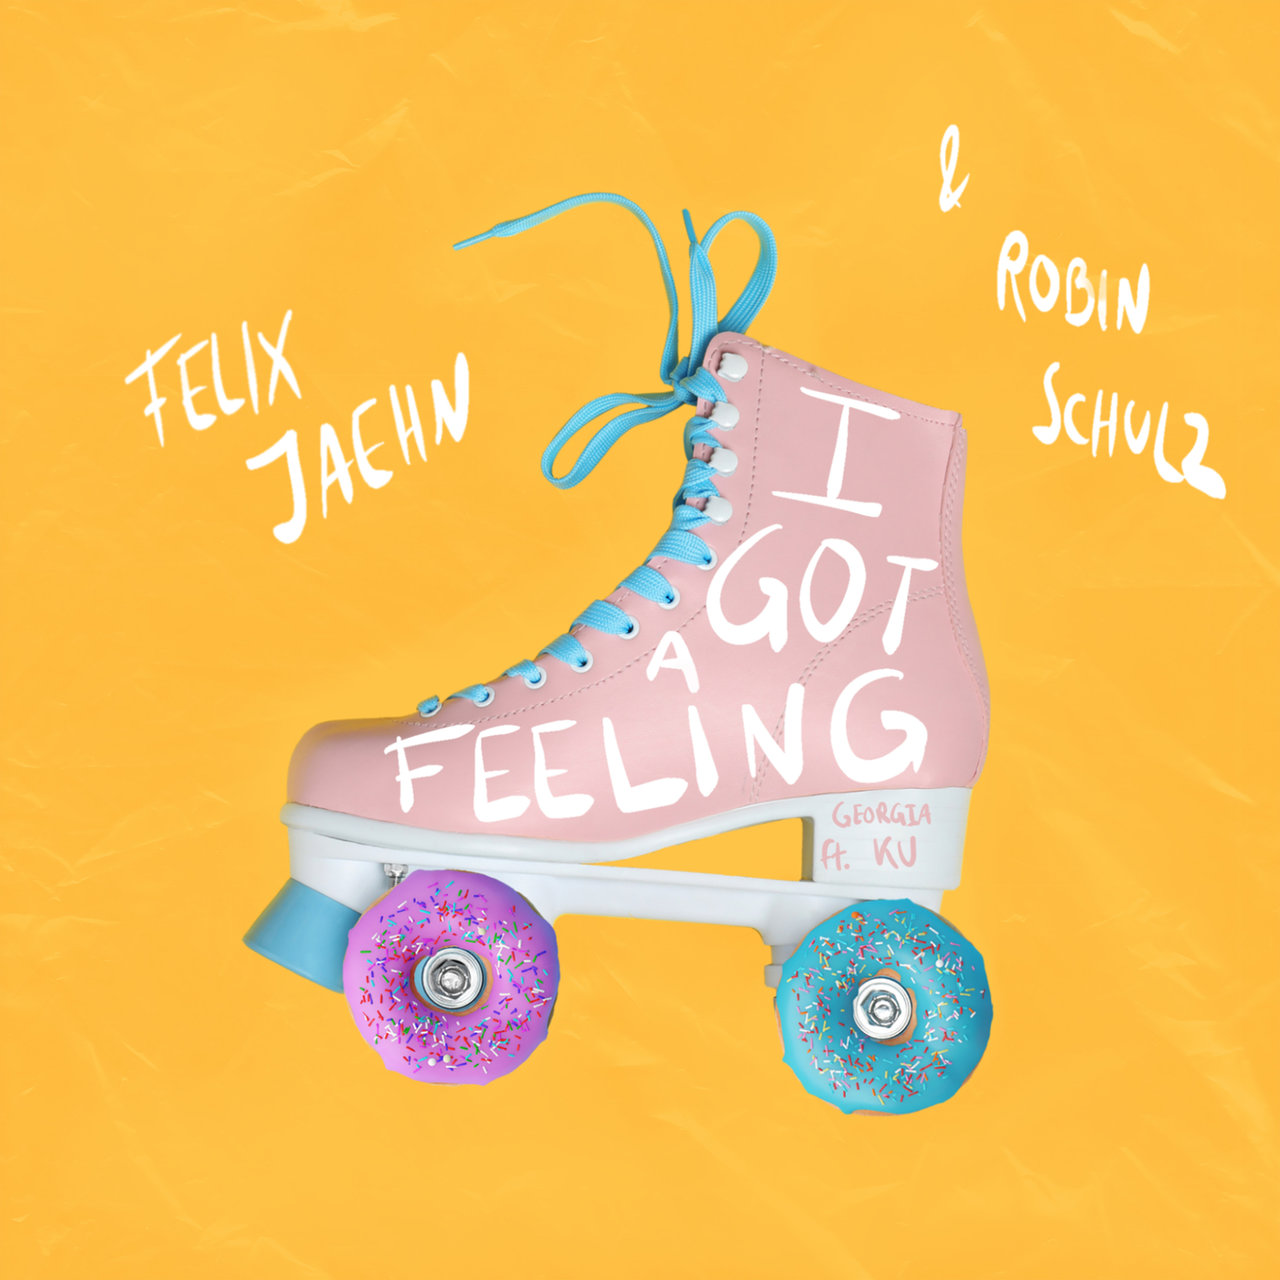 Felix Jaehn & Robin Schulz ft. featuring Georgia Ku I Got A Feeling cover artwork